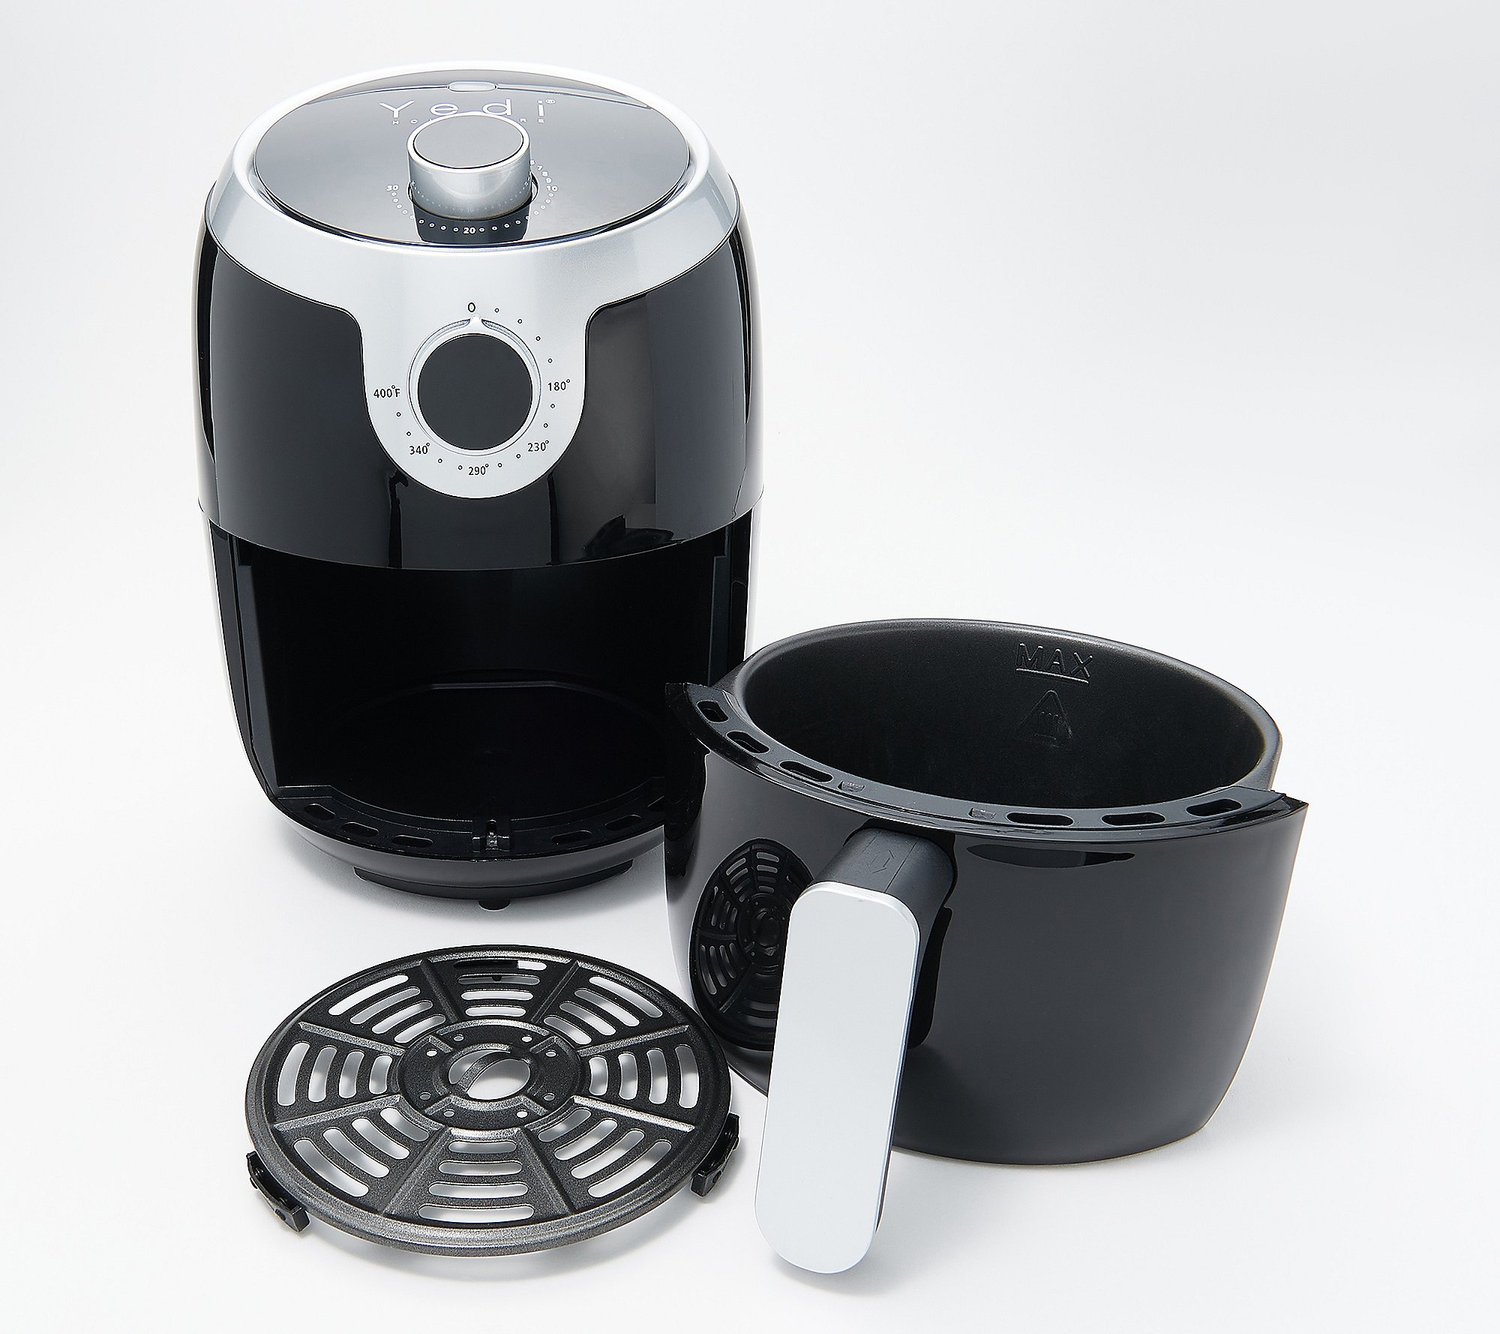 Mini Air Fryer 2 Quart — Yedi Houseware Appliances